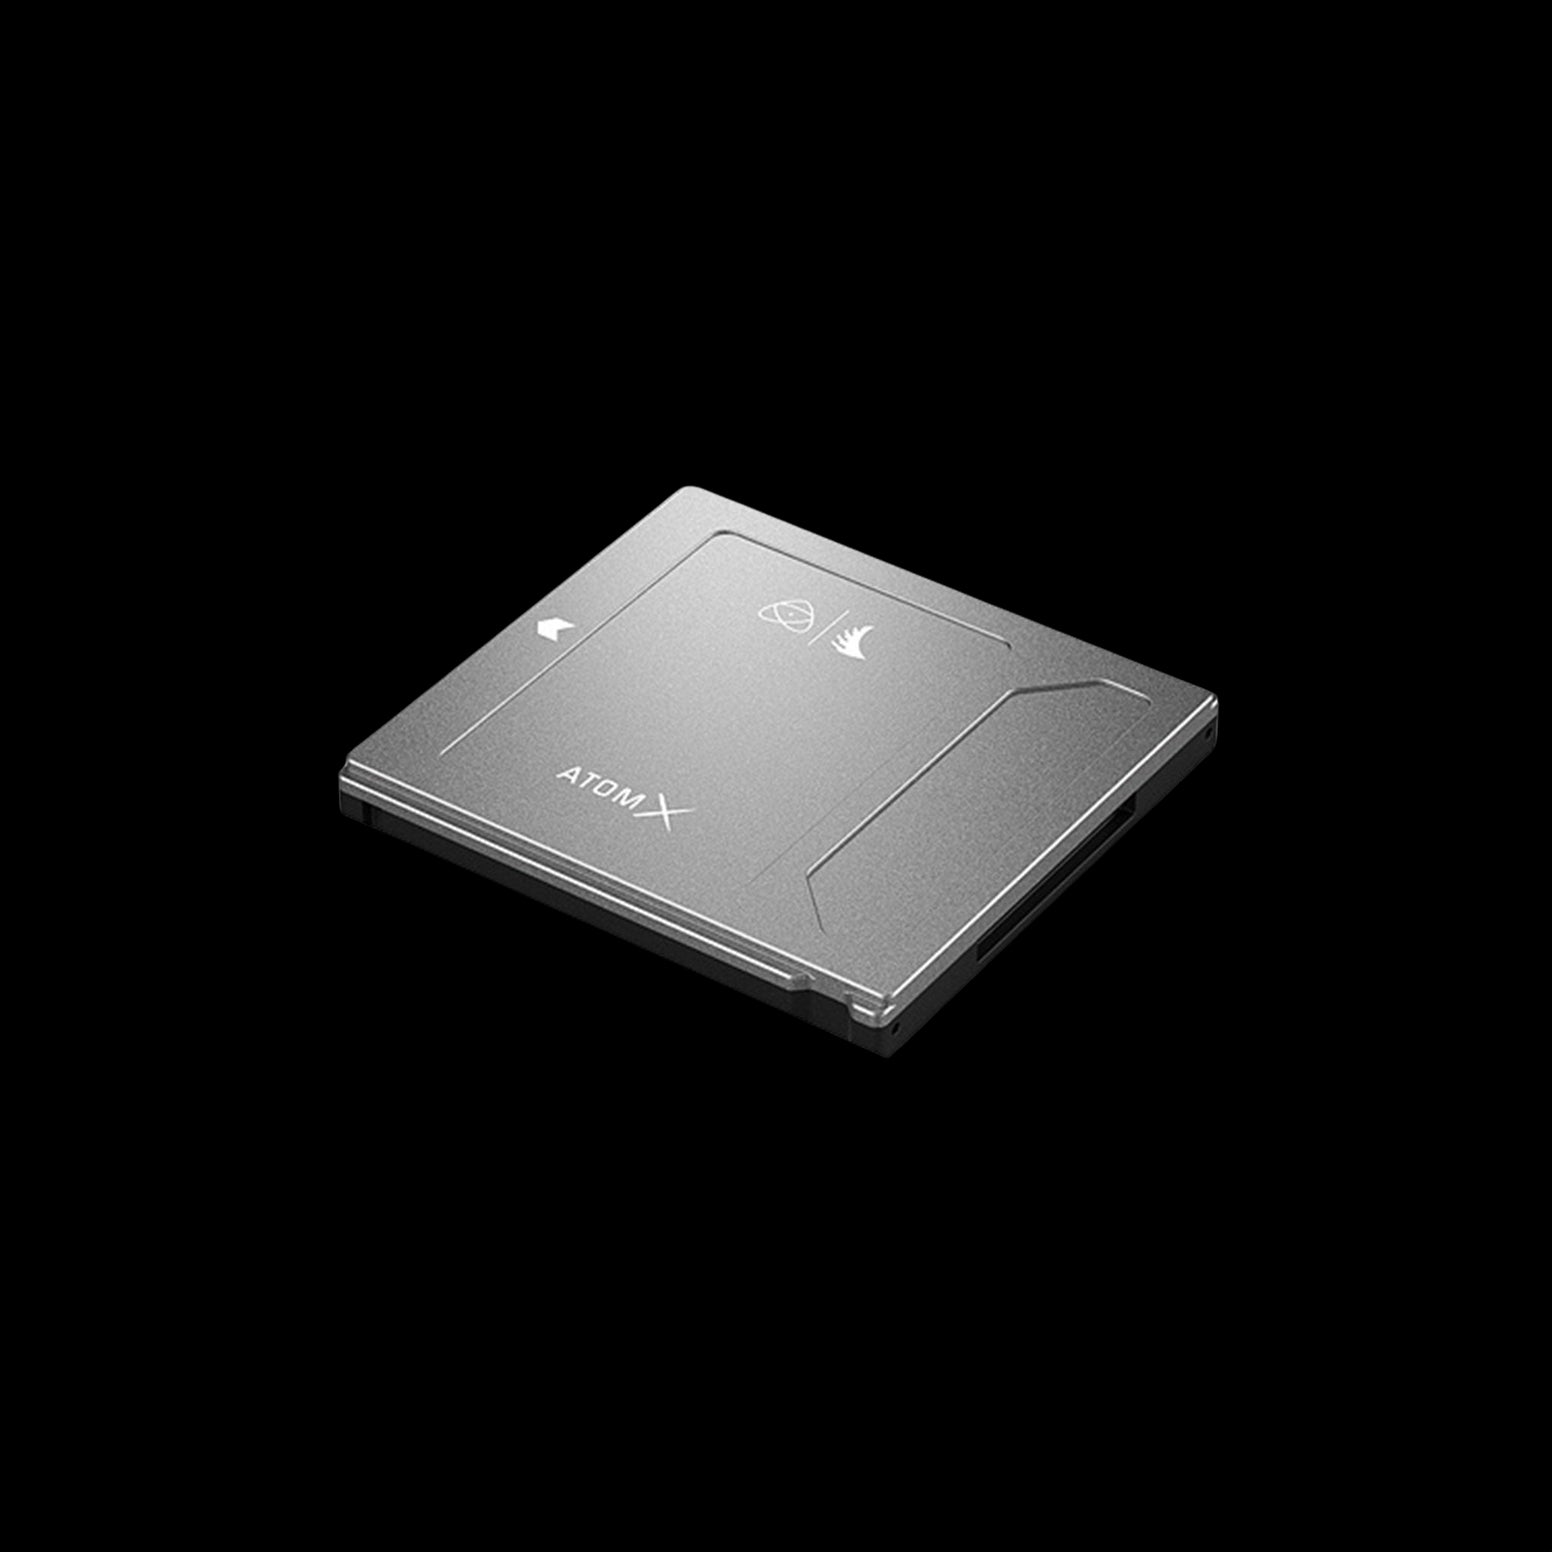 Angelbird 2TB AtomX External SSD mini for Atomos - Discontinued